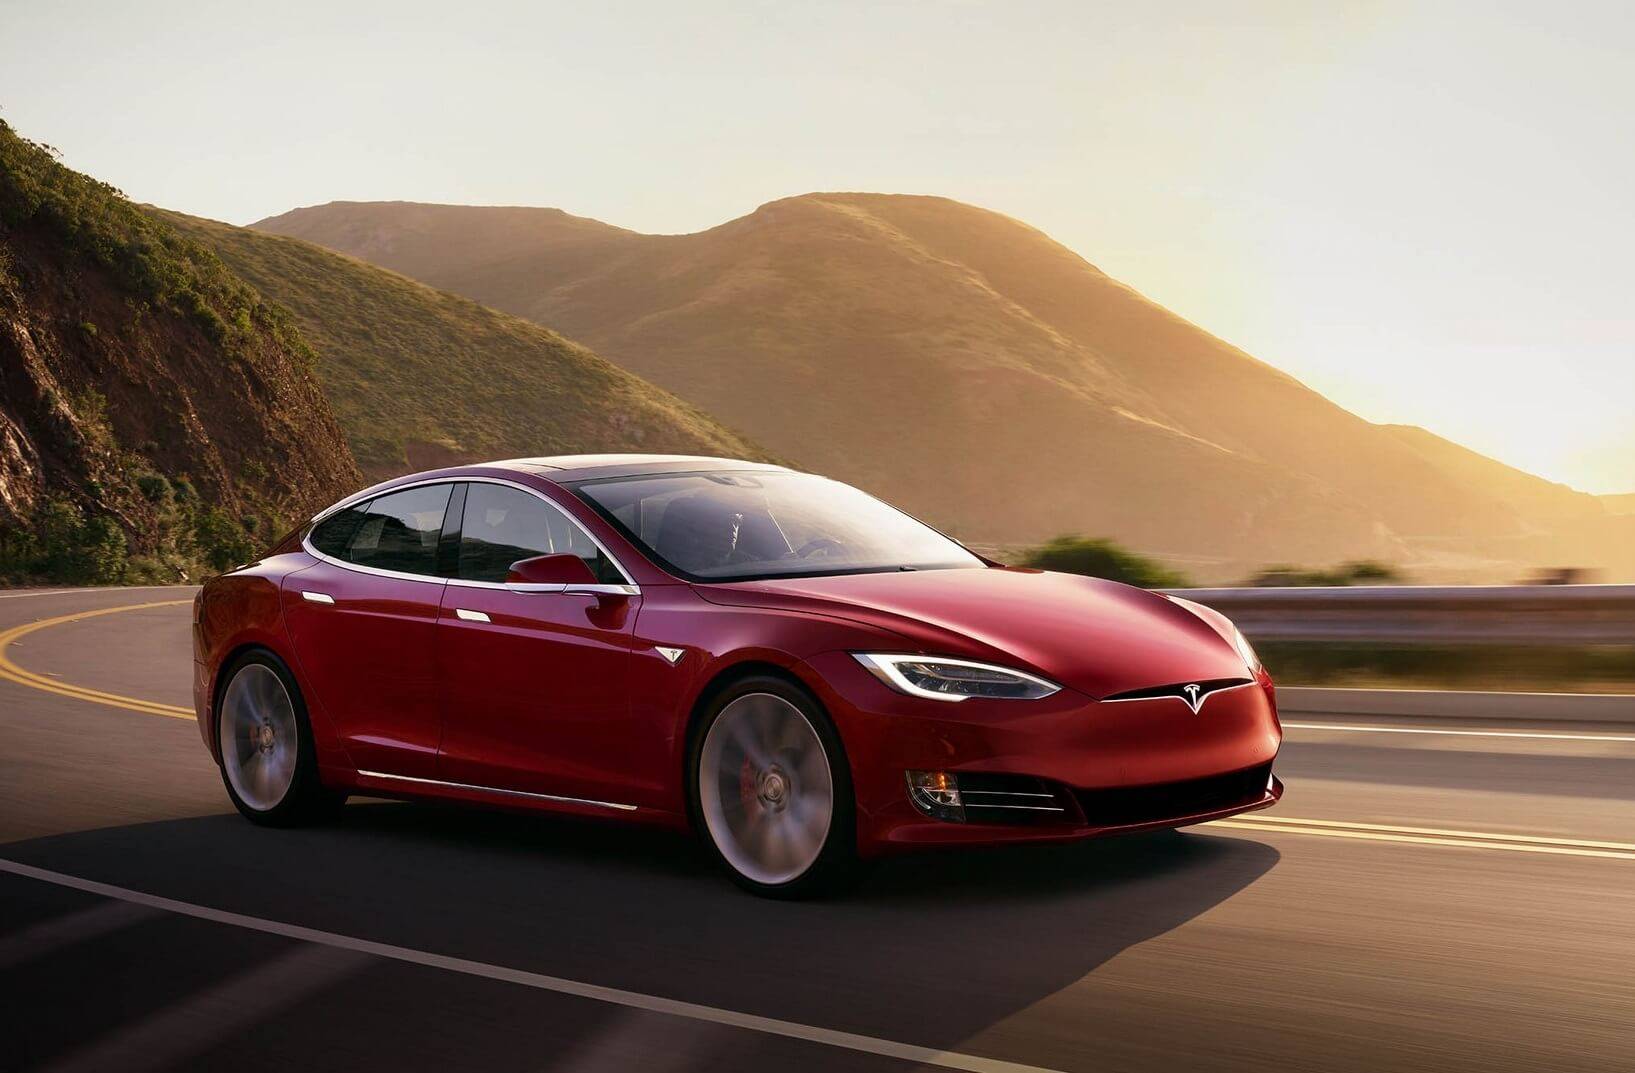 Tesla Model S on the road